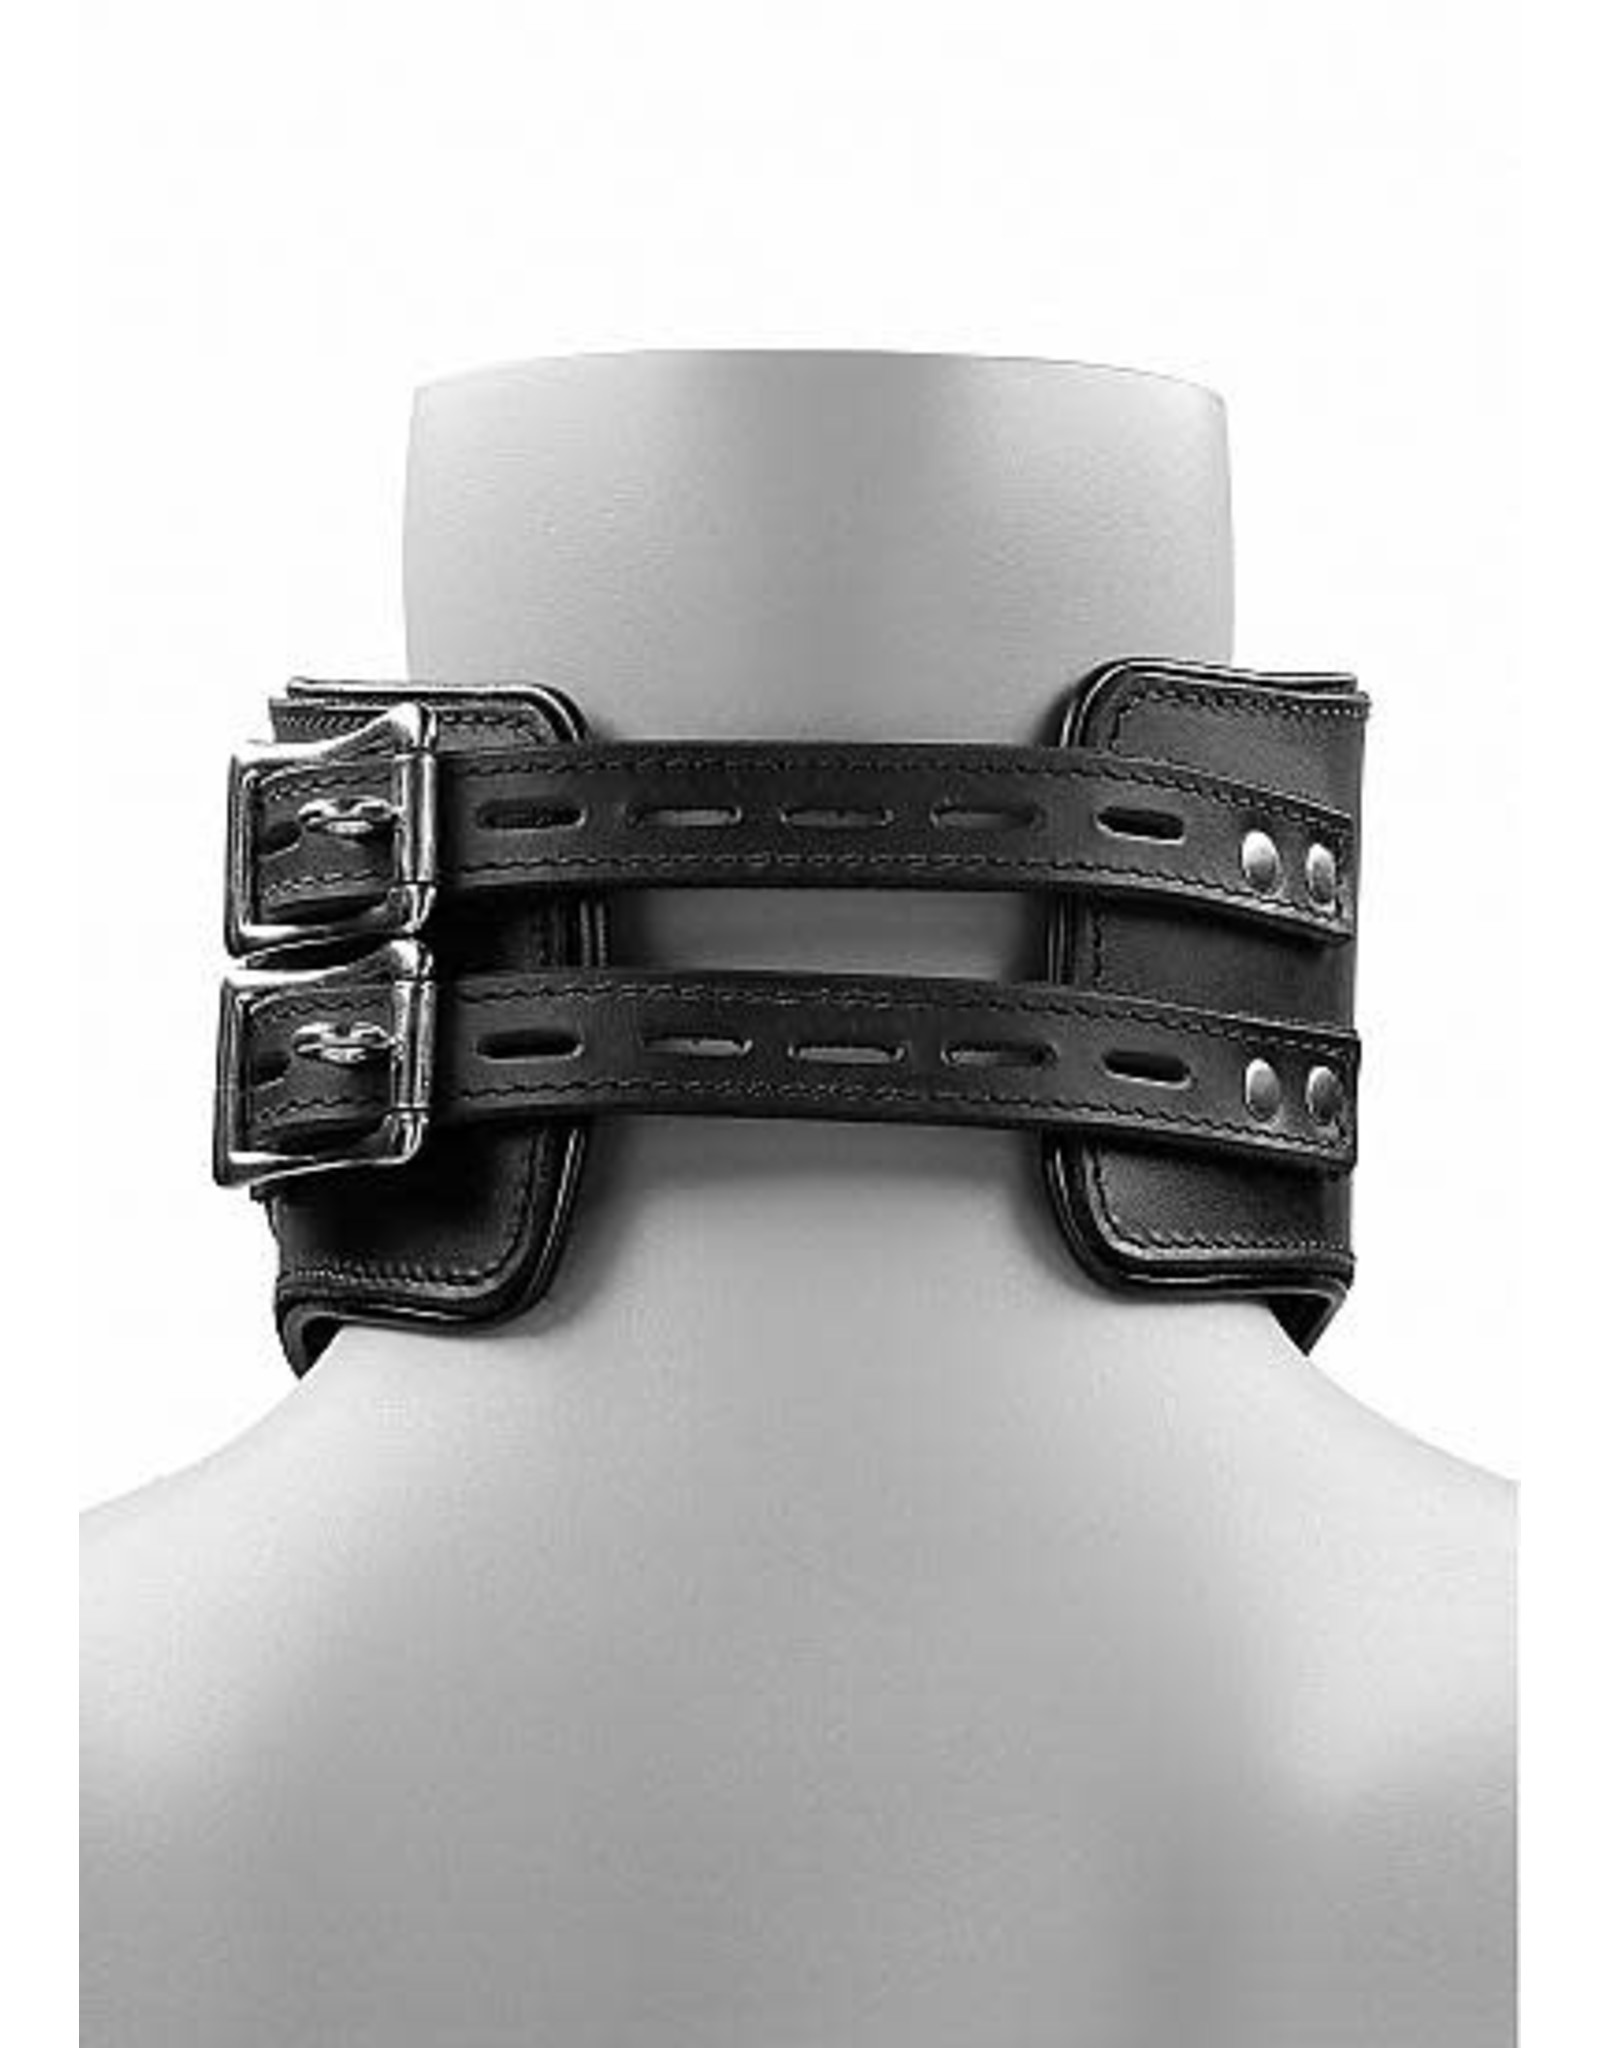 https://cdn.shoplightspeed.com/shops/632028/files/34220197/1600x2048x2/shots-pain-heavy-duty-leather-padded-posture-colla.jpg